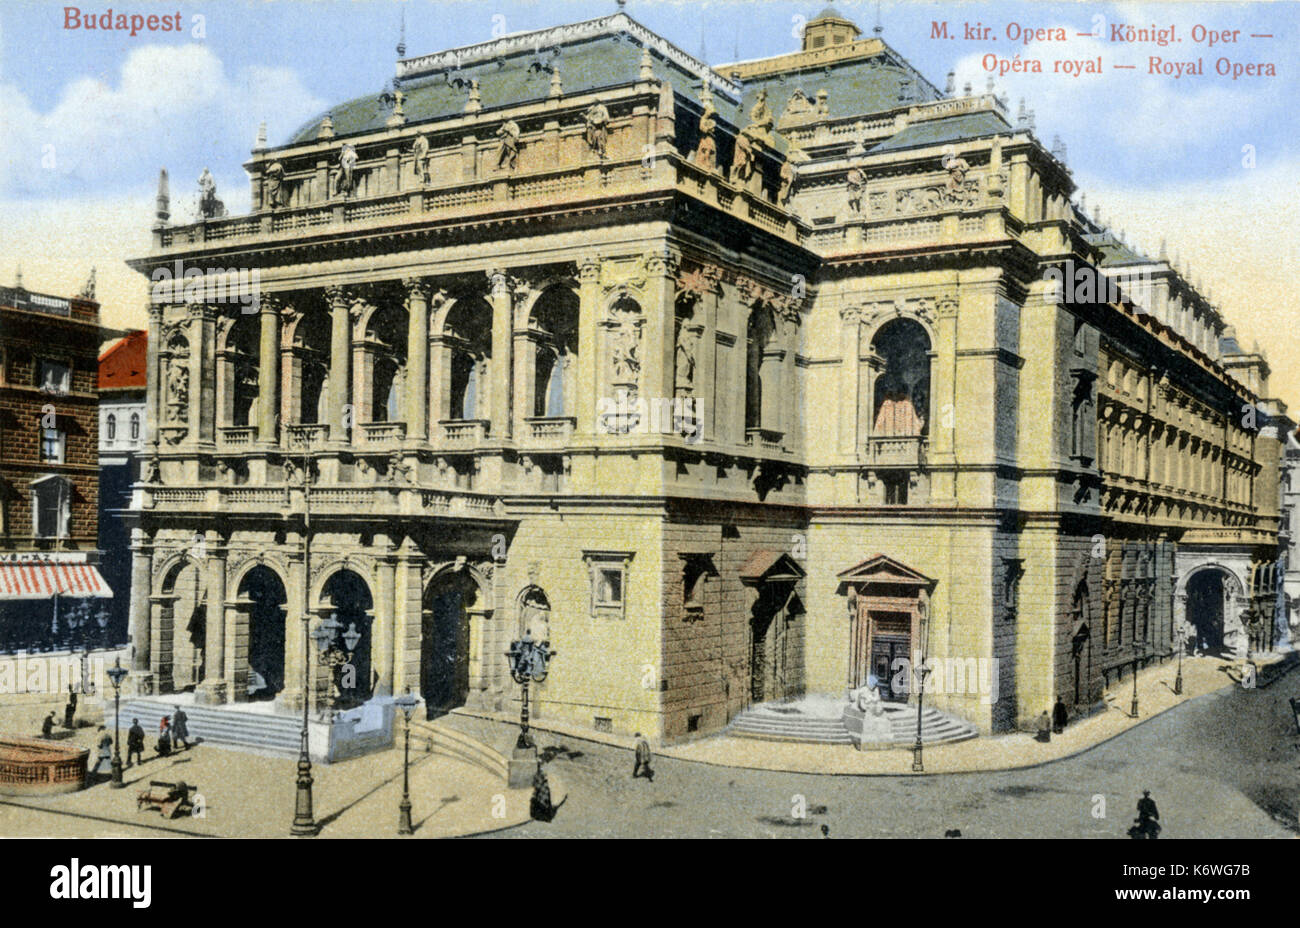 BUDAPEST - ROYAL OPERA HOUSE - early 20th century exterior Stock Photo